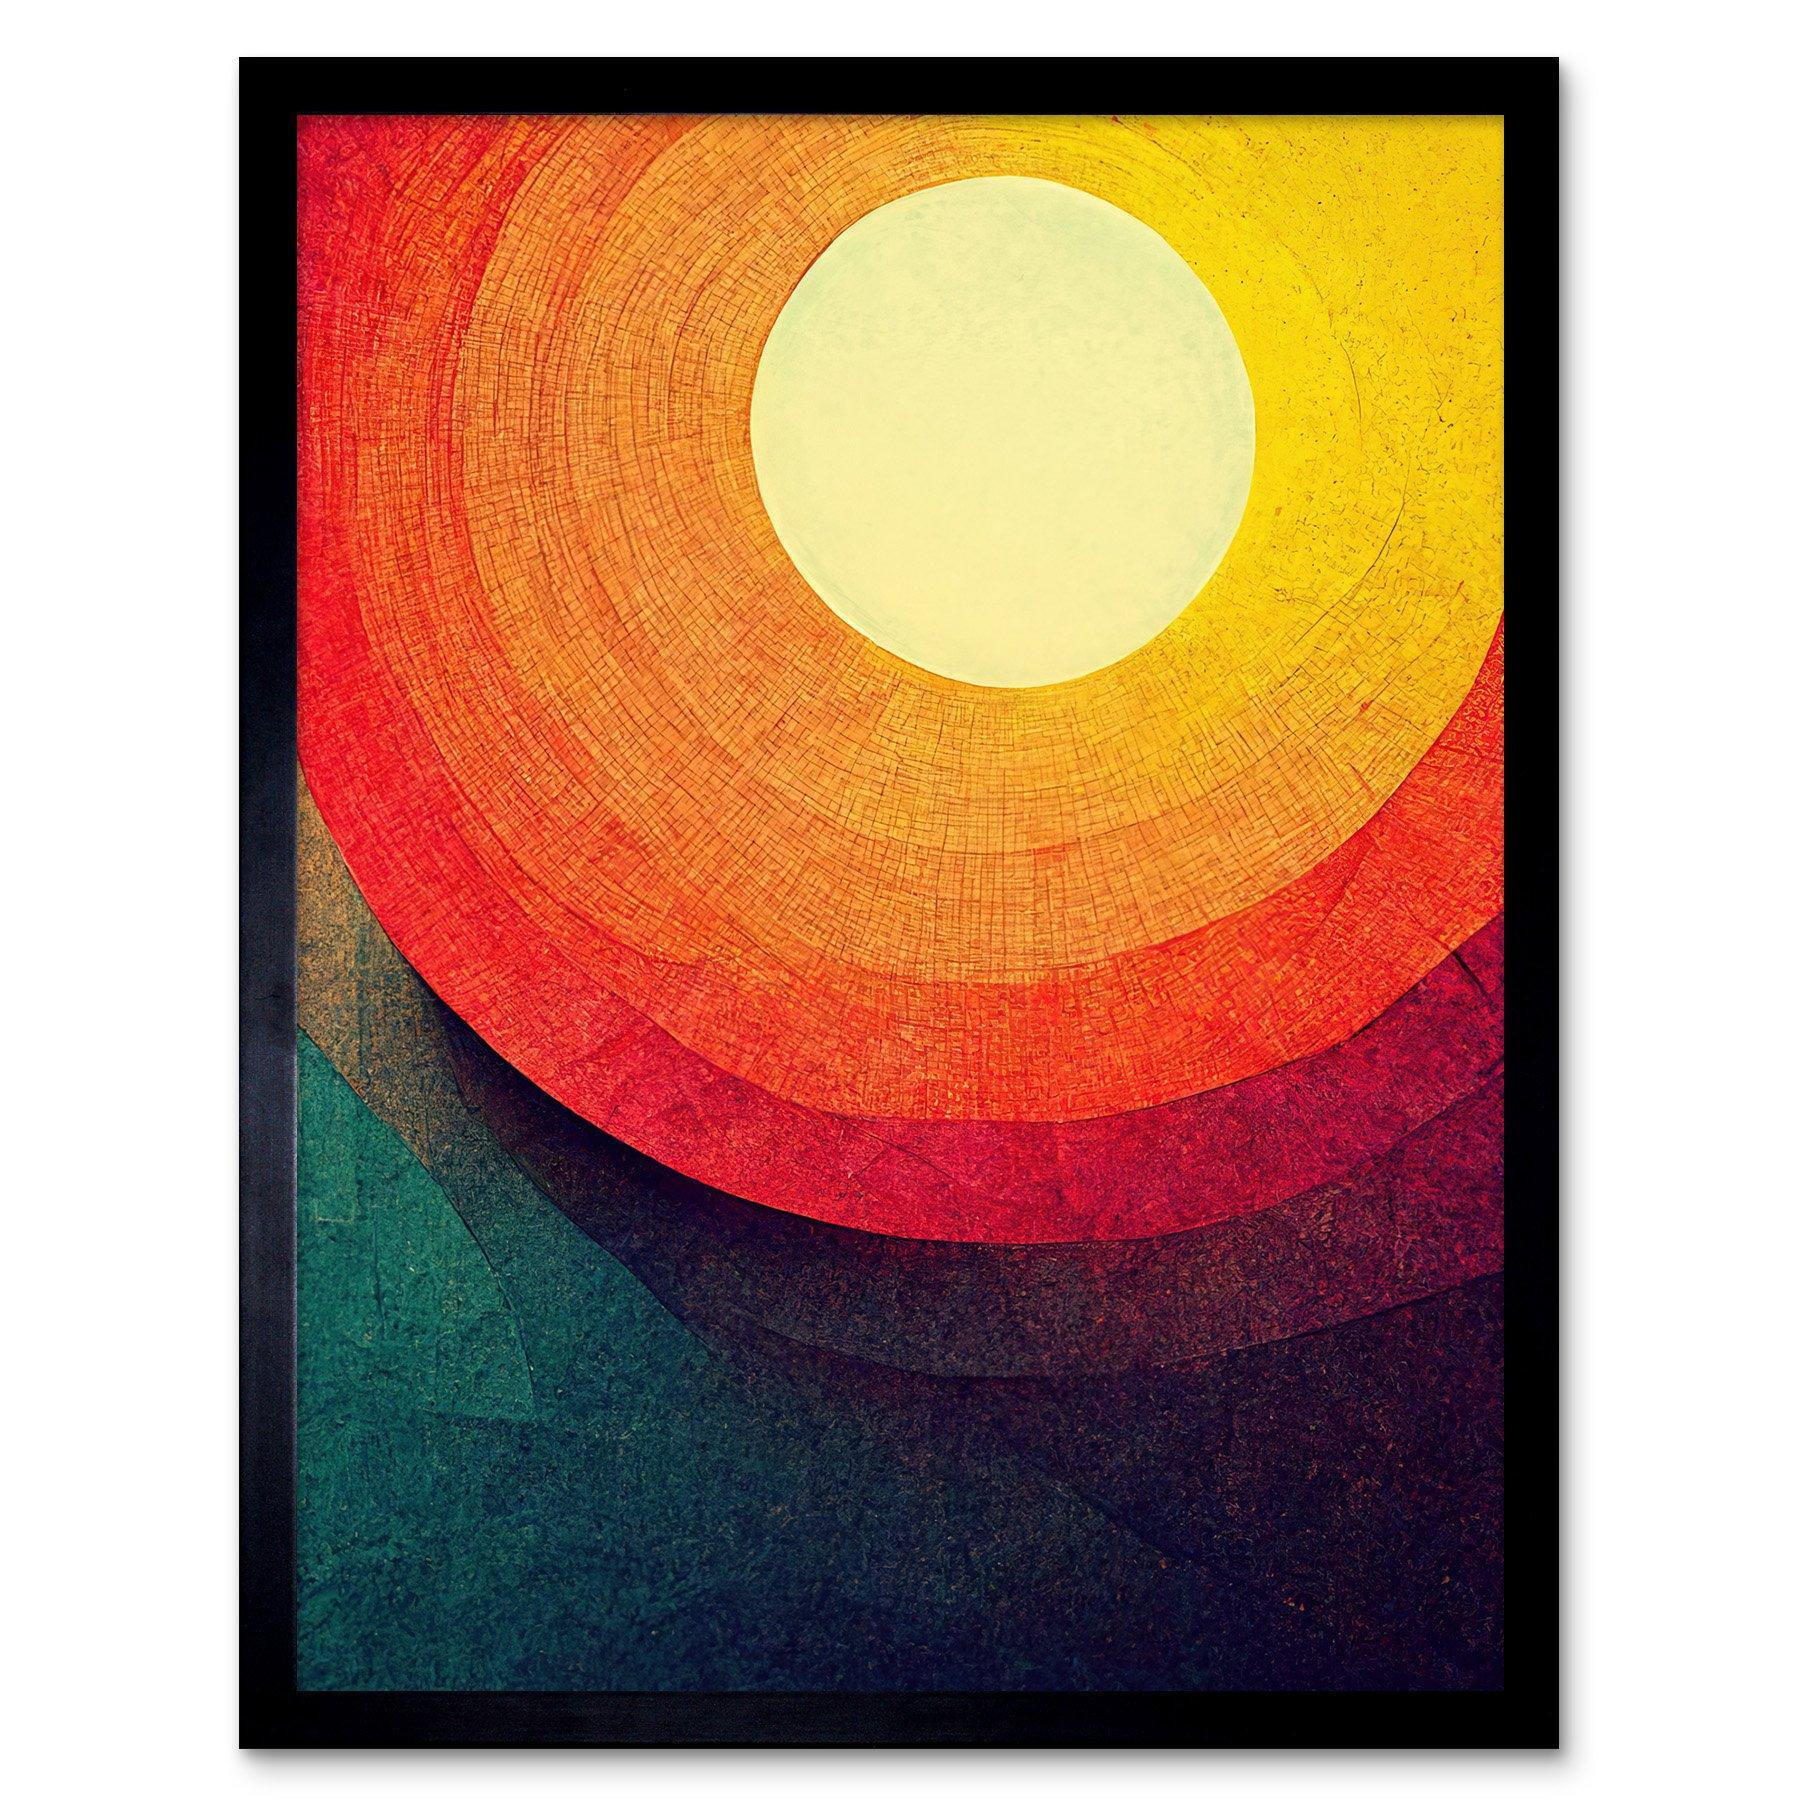 Abstract Sunrise Sunset Sunshine Retro Style Yellow Orange Cream Teal Art Print Framed Poster Wall Decor 12x16 inch - image 1